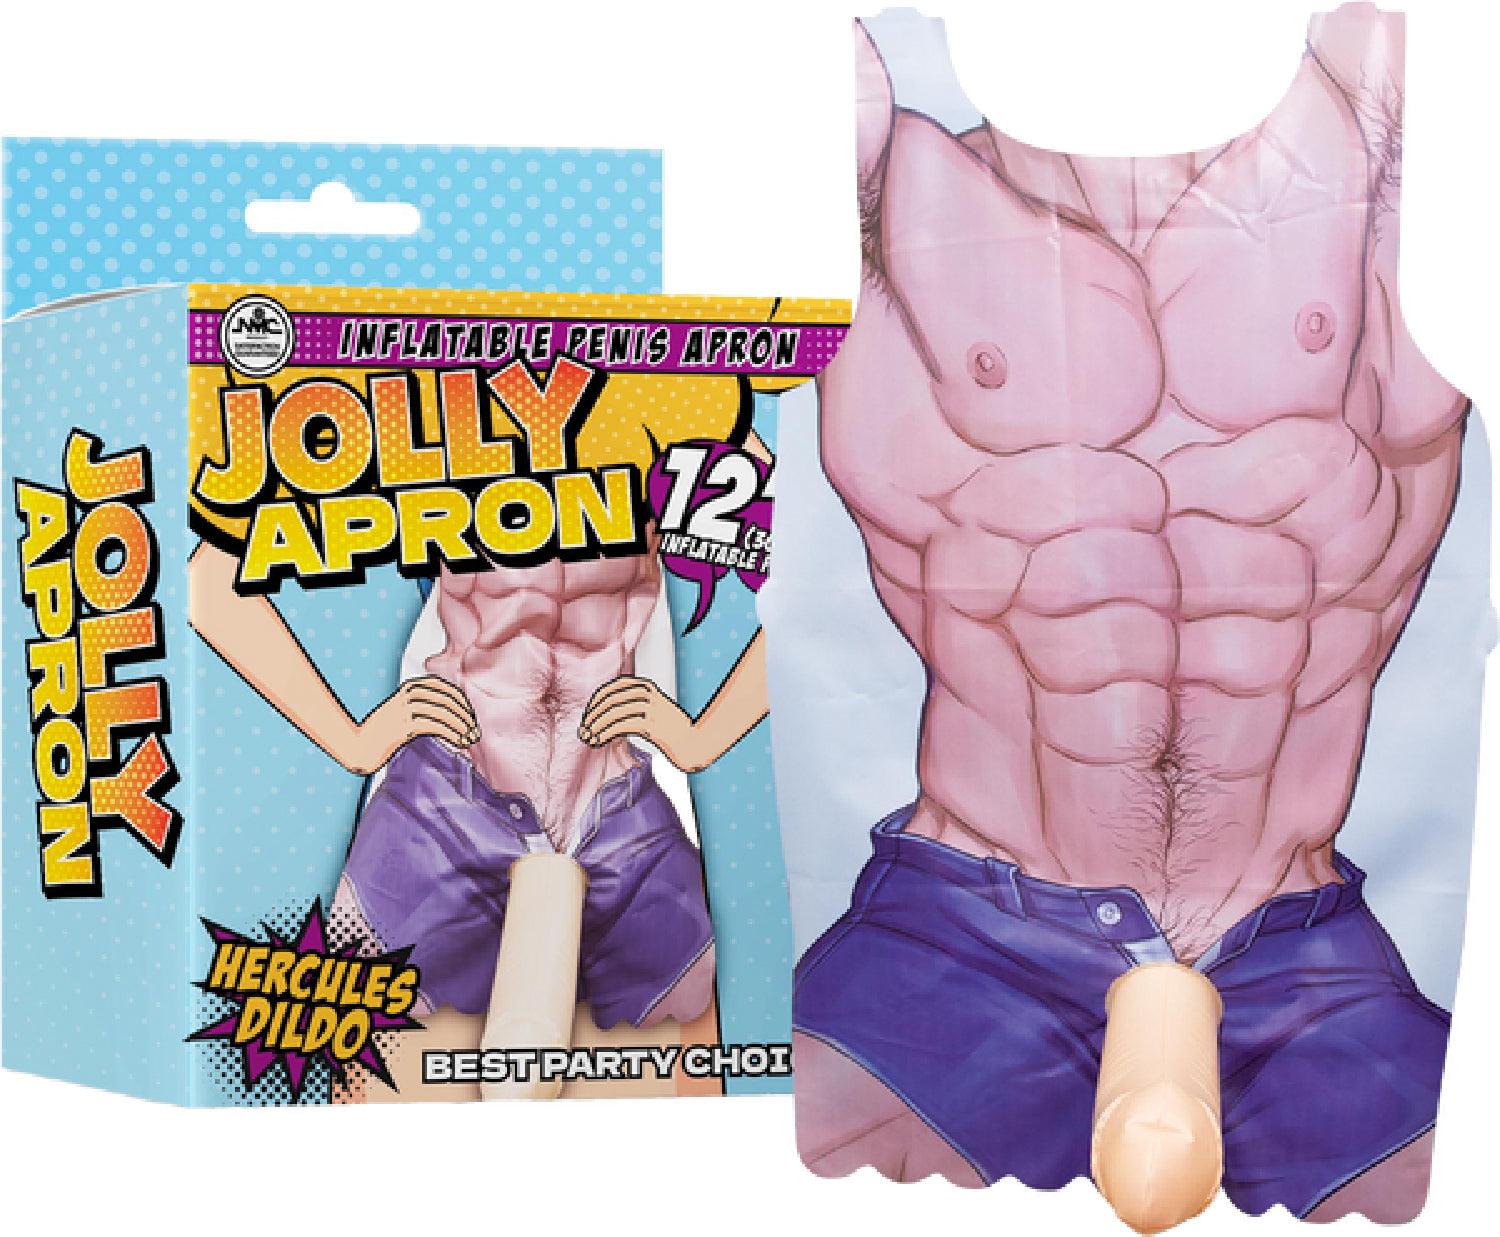 Jolly Apron - 12" Inflatable Penis - Take A Peek